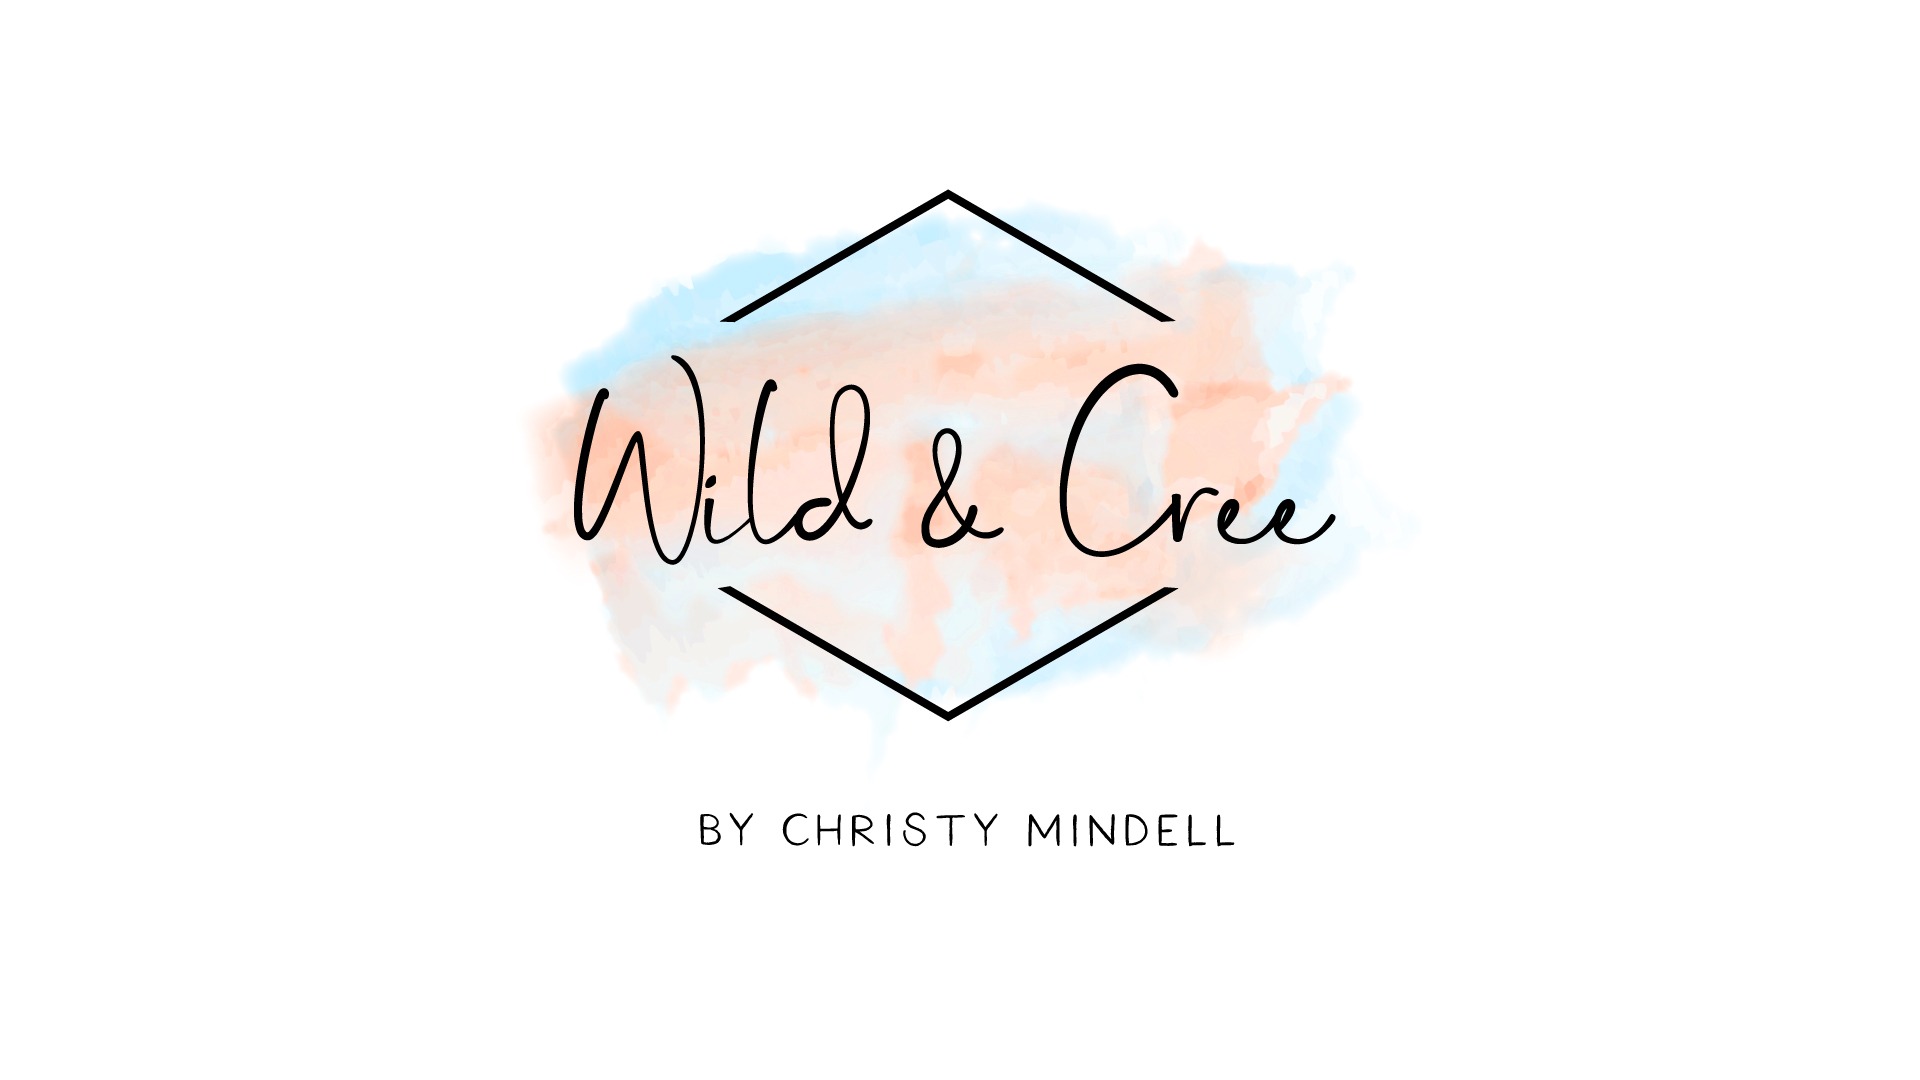 Wild & Cree